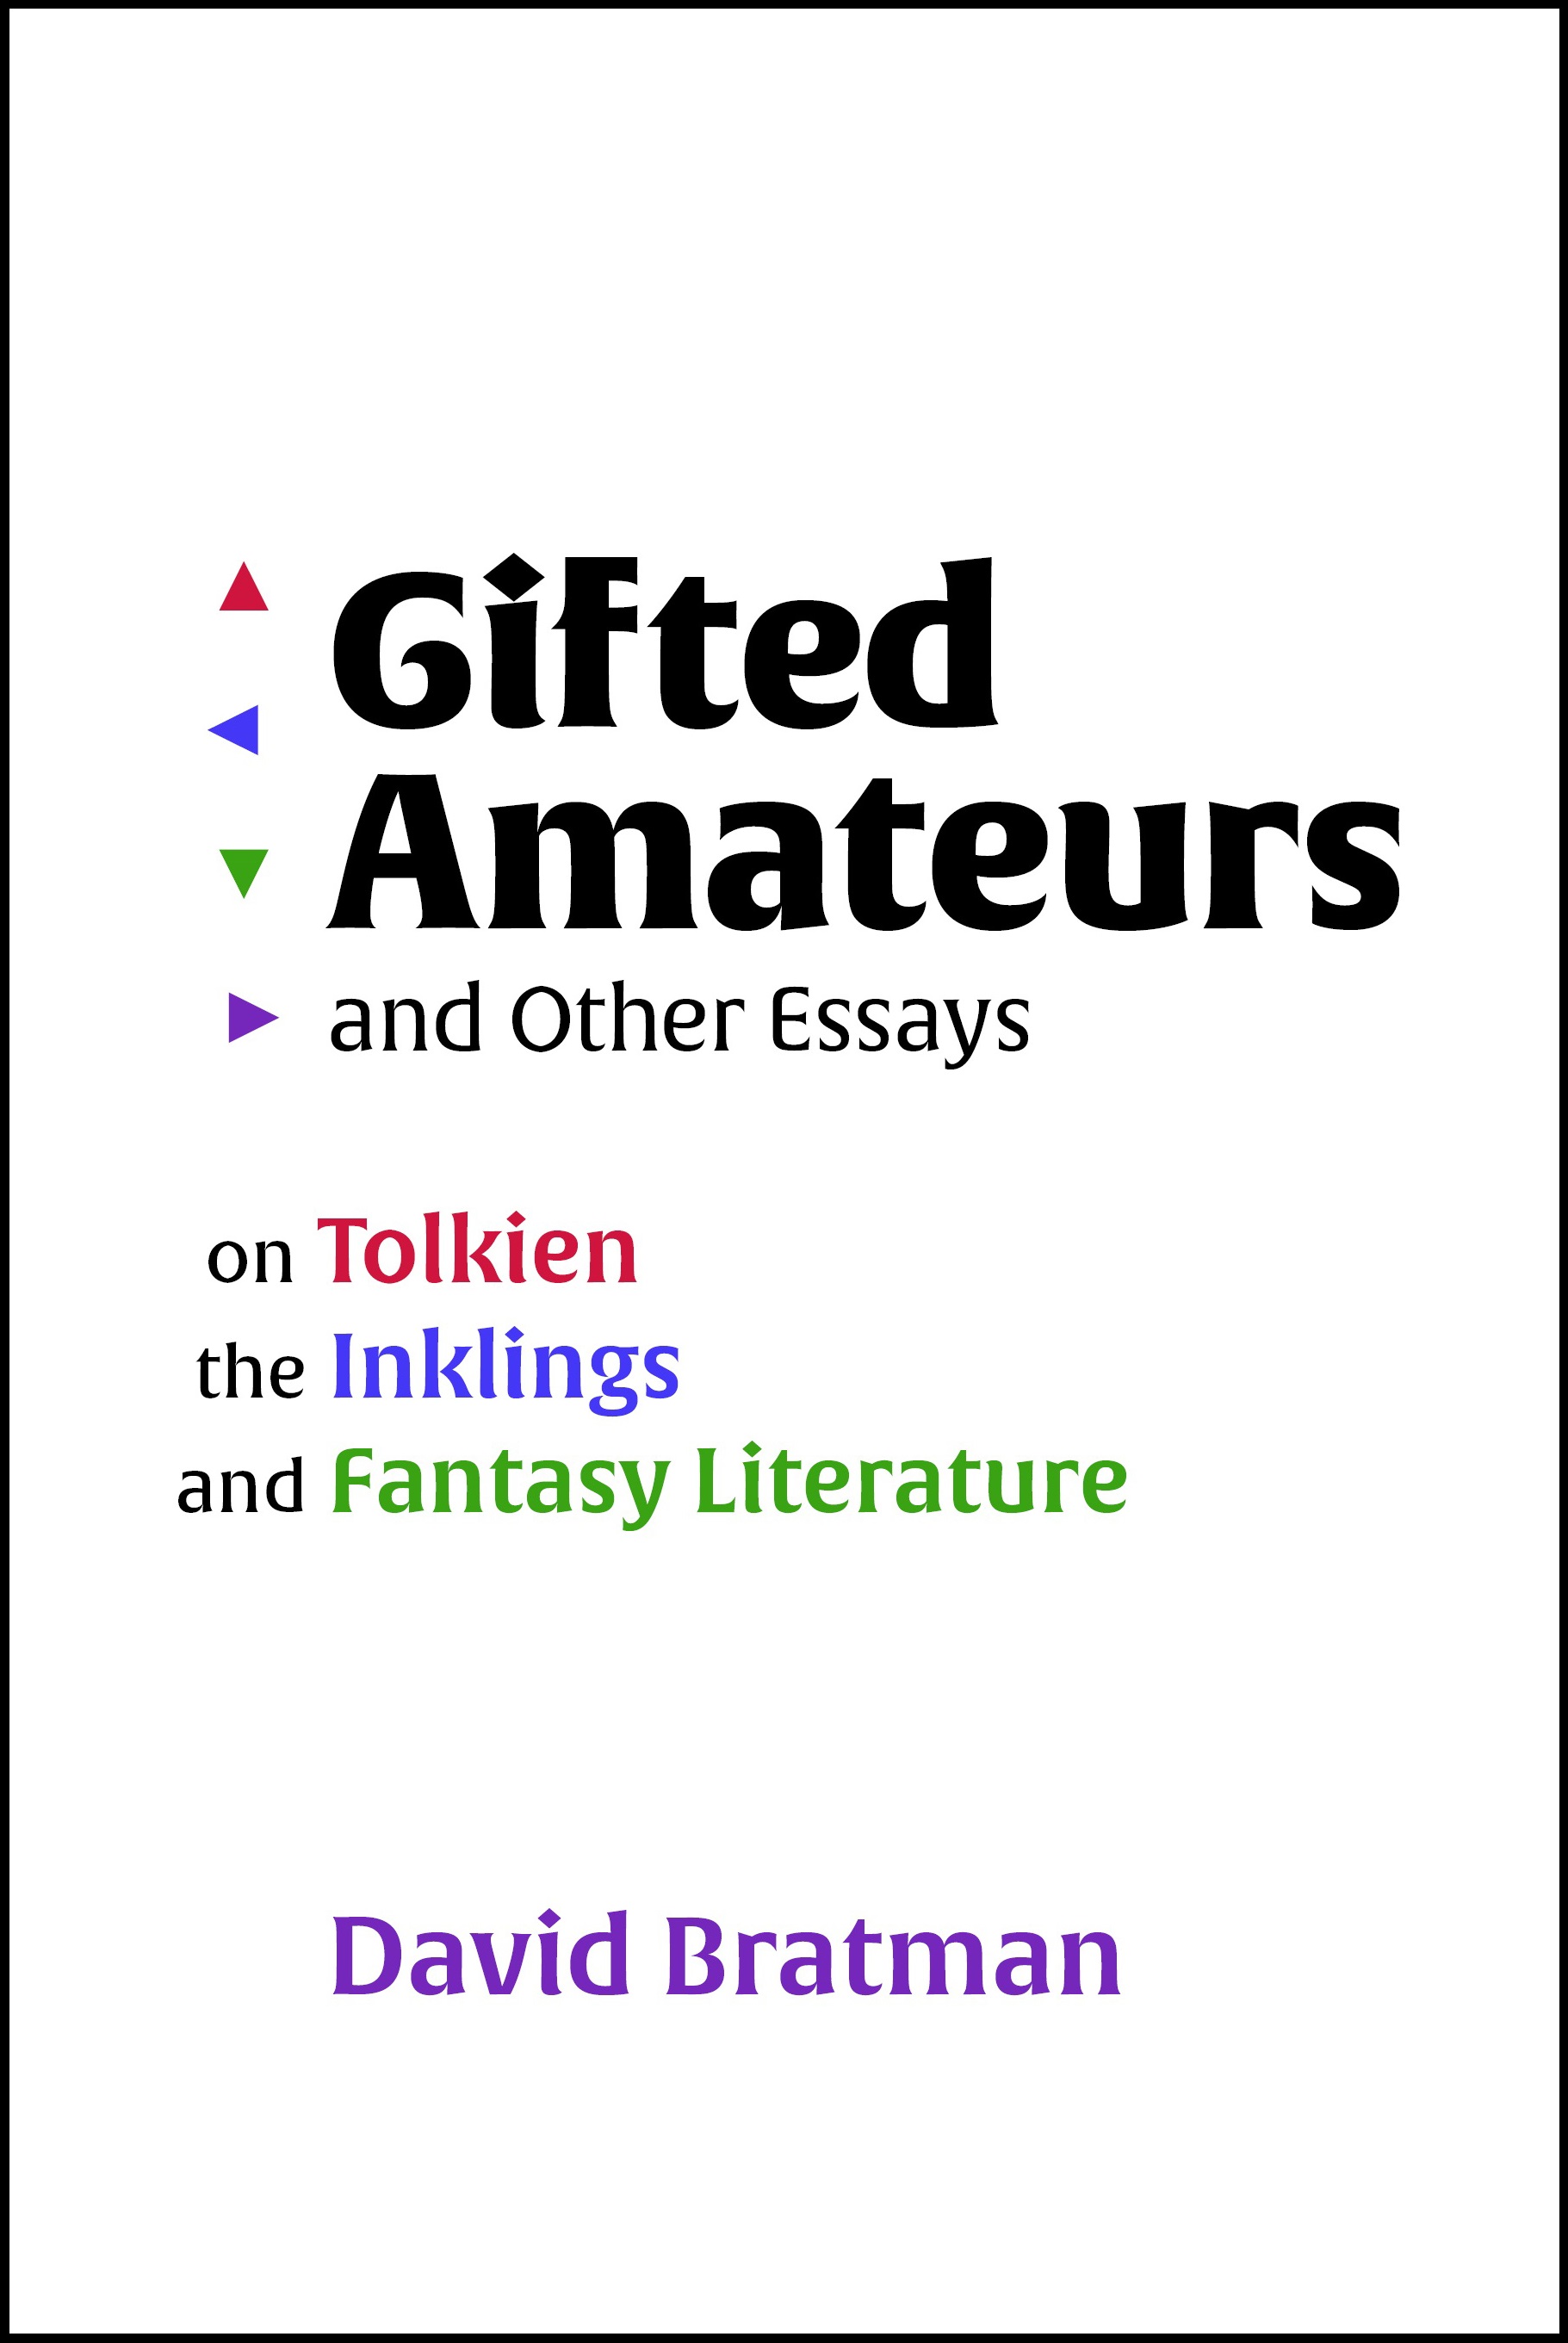 Gifted Amateurs, Mythopoeic Press